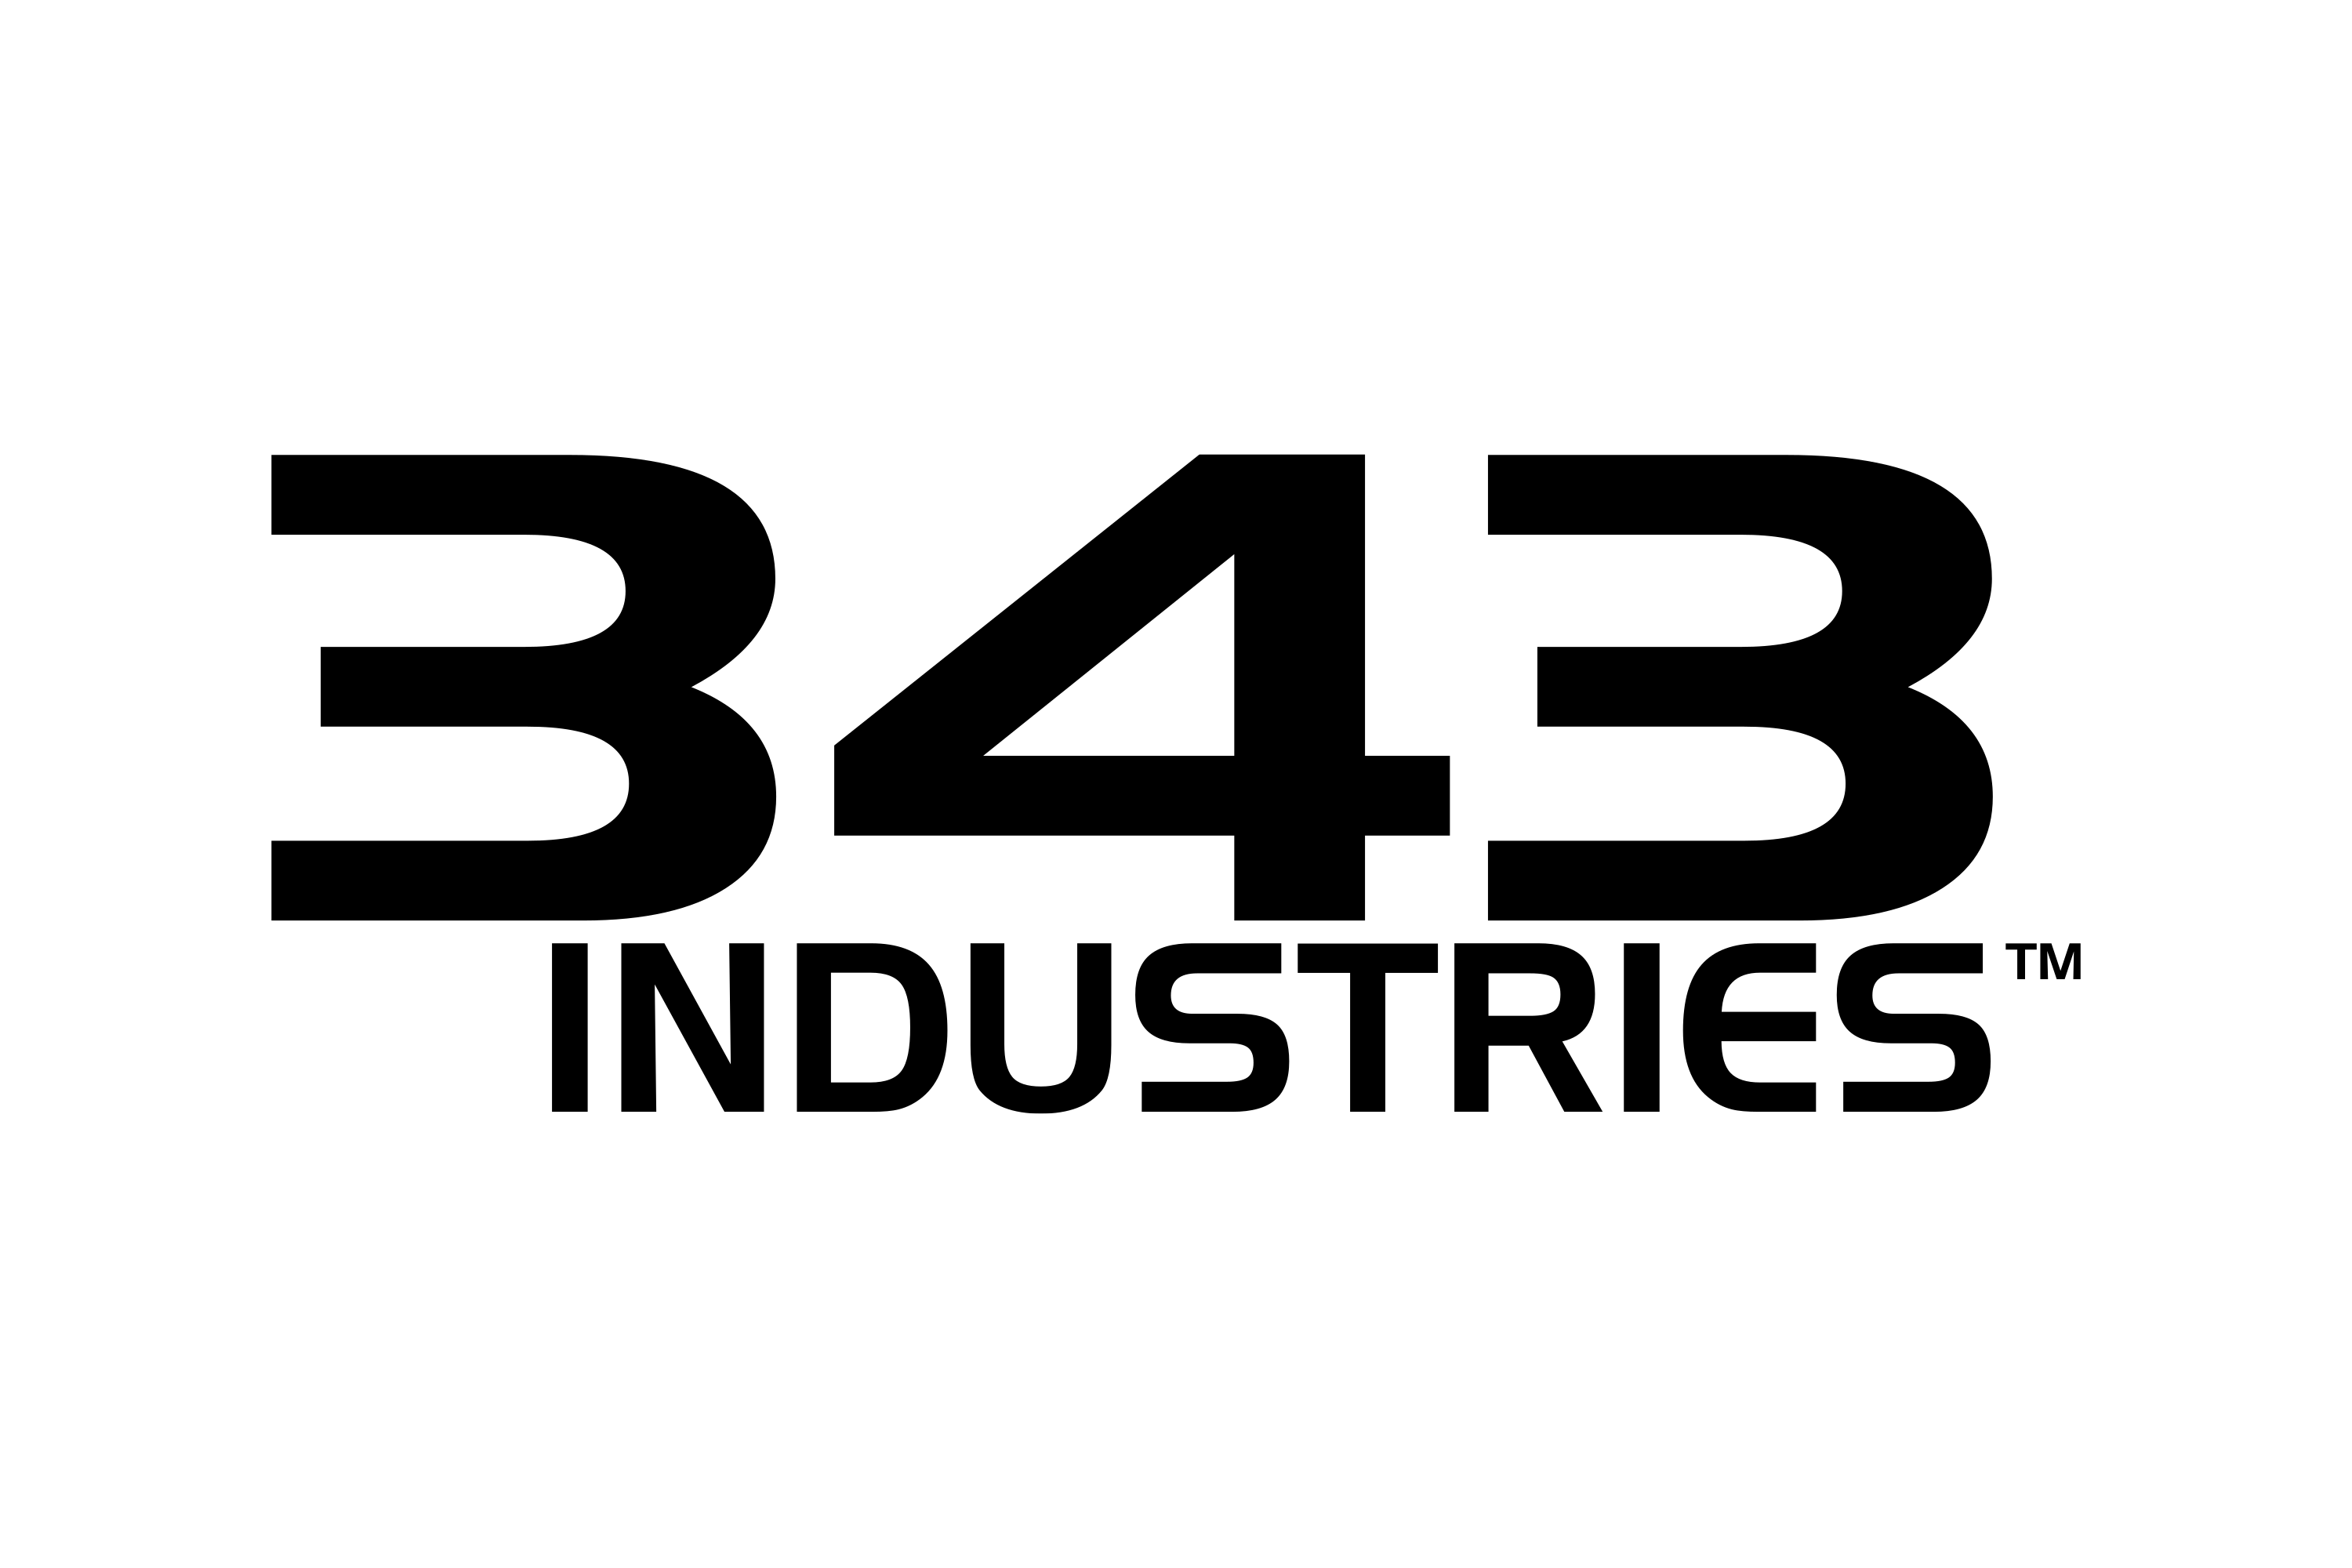 343 Industrie Proxy